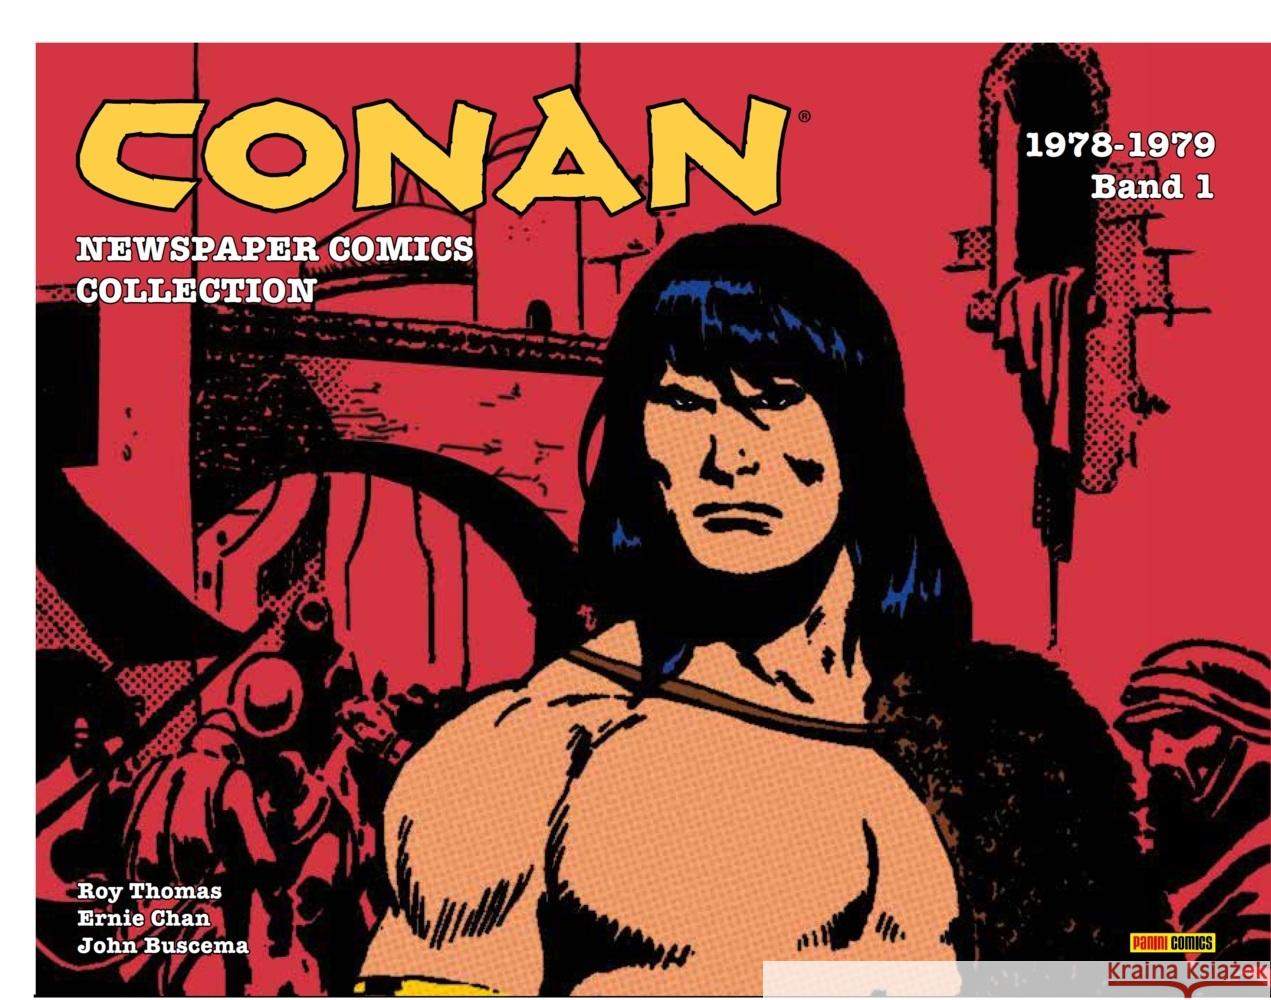 Conan Newspaper Comics Collection Thomas, Roy, Buscema, John, Chan, Ernie 9783741625572